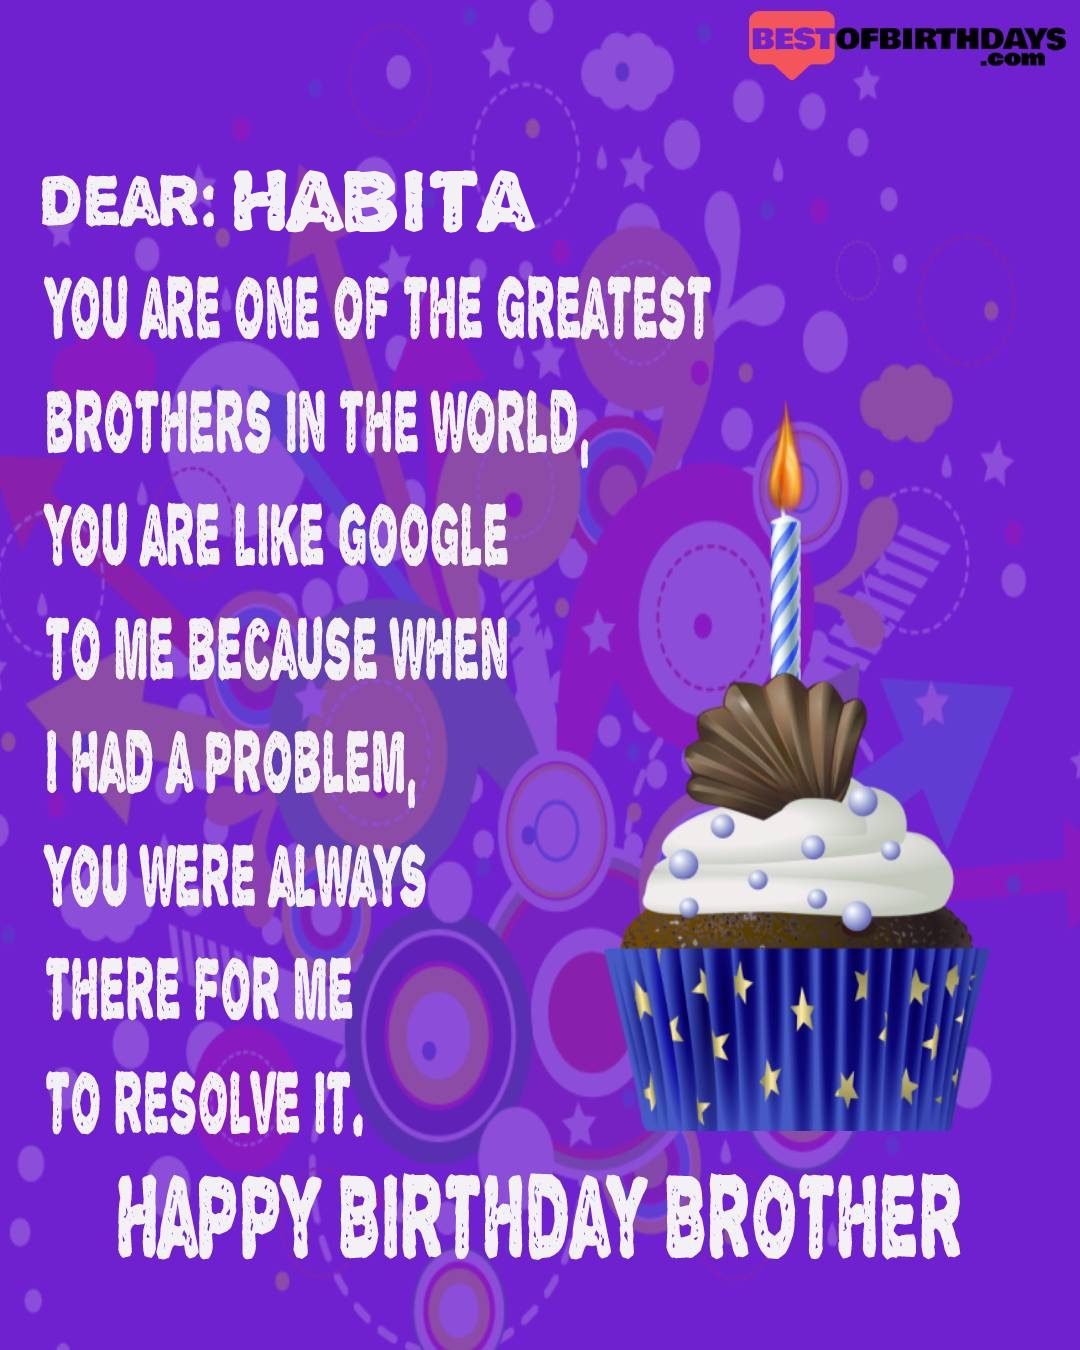 Happy birthday habita bhai brother bro